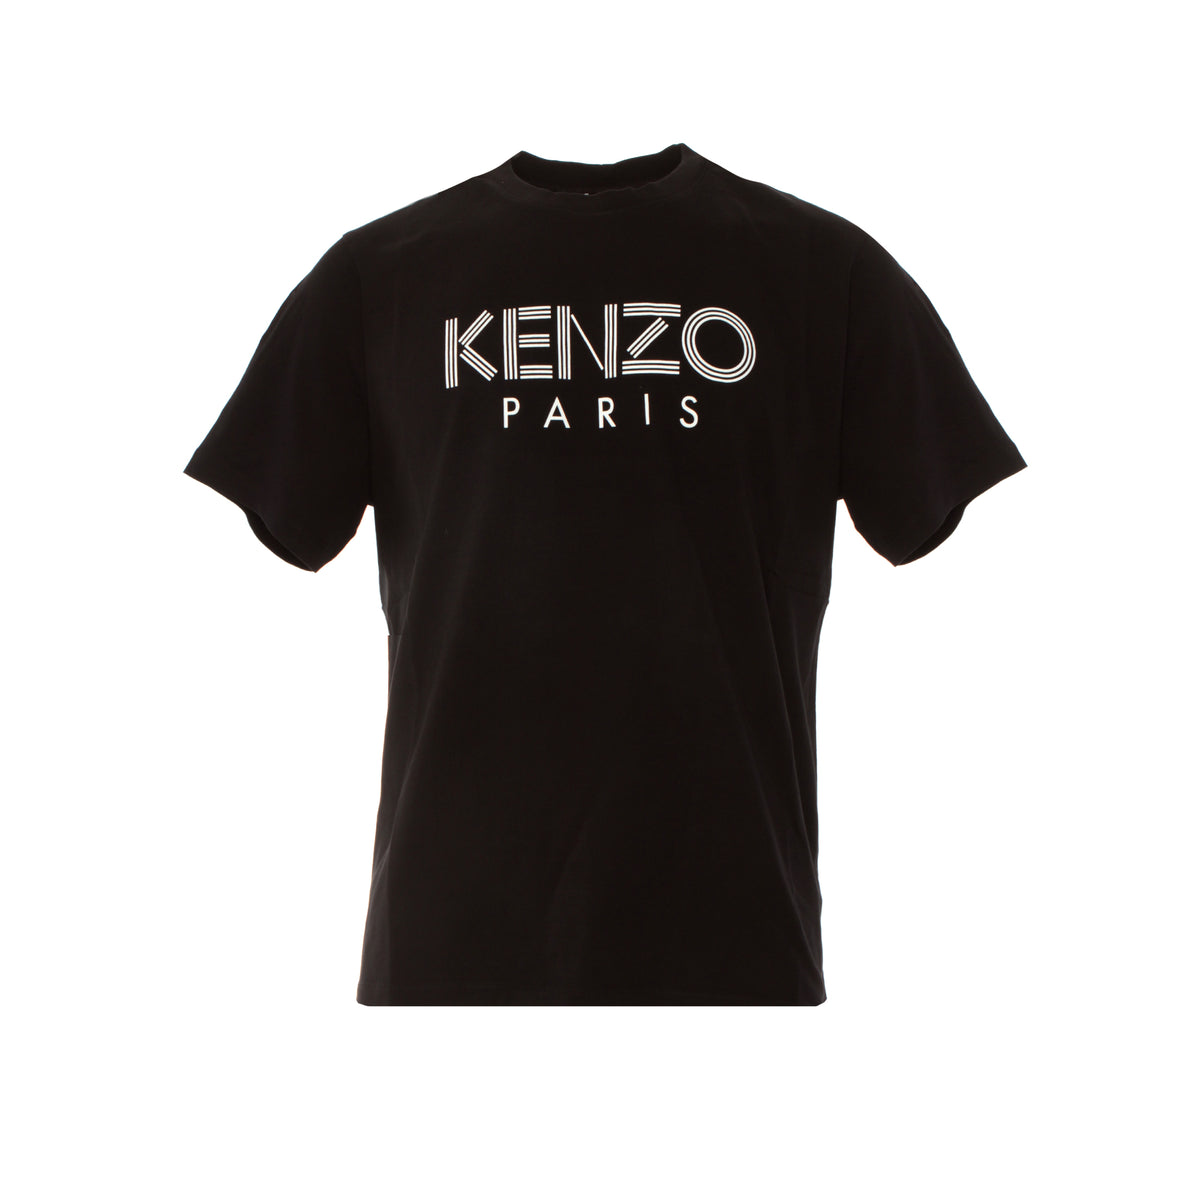 Kenzo Paris Classic T-Shirt Black 